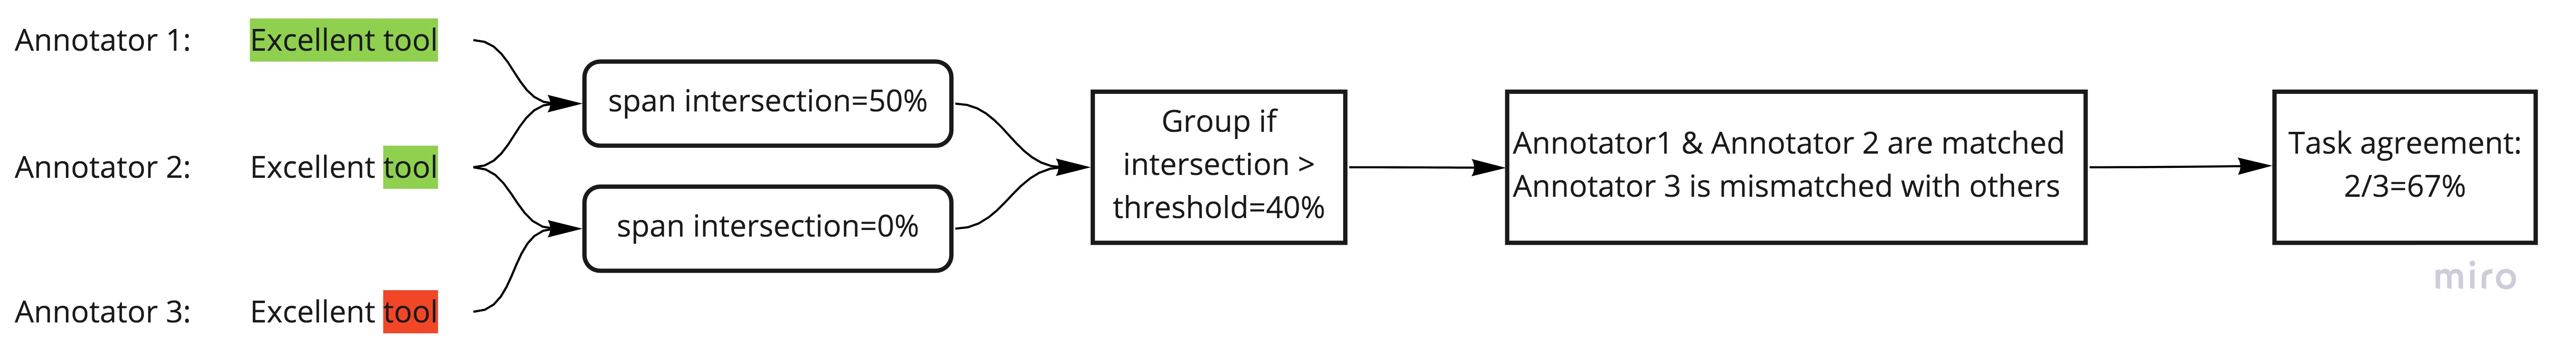 diagram showing example labeling scenario duplicated in surrounding text